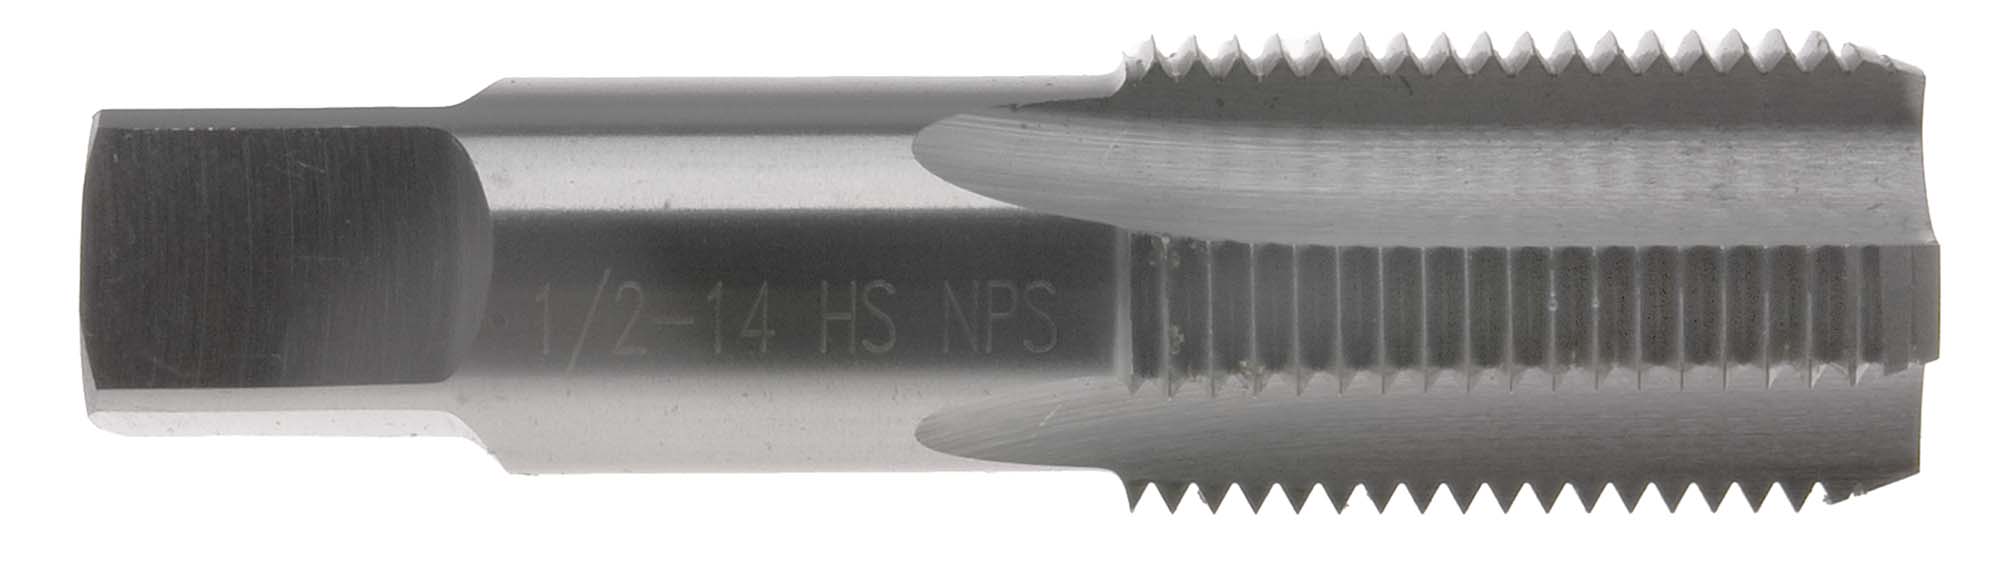 3"-8 NPS Straight Pipe Tap, High Speed Steel